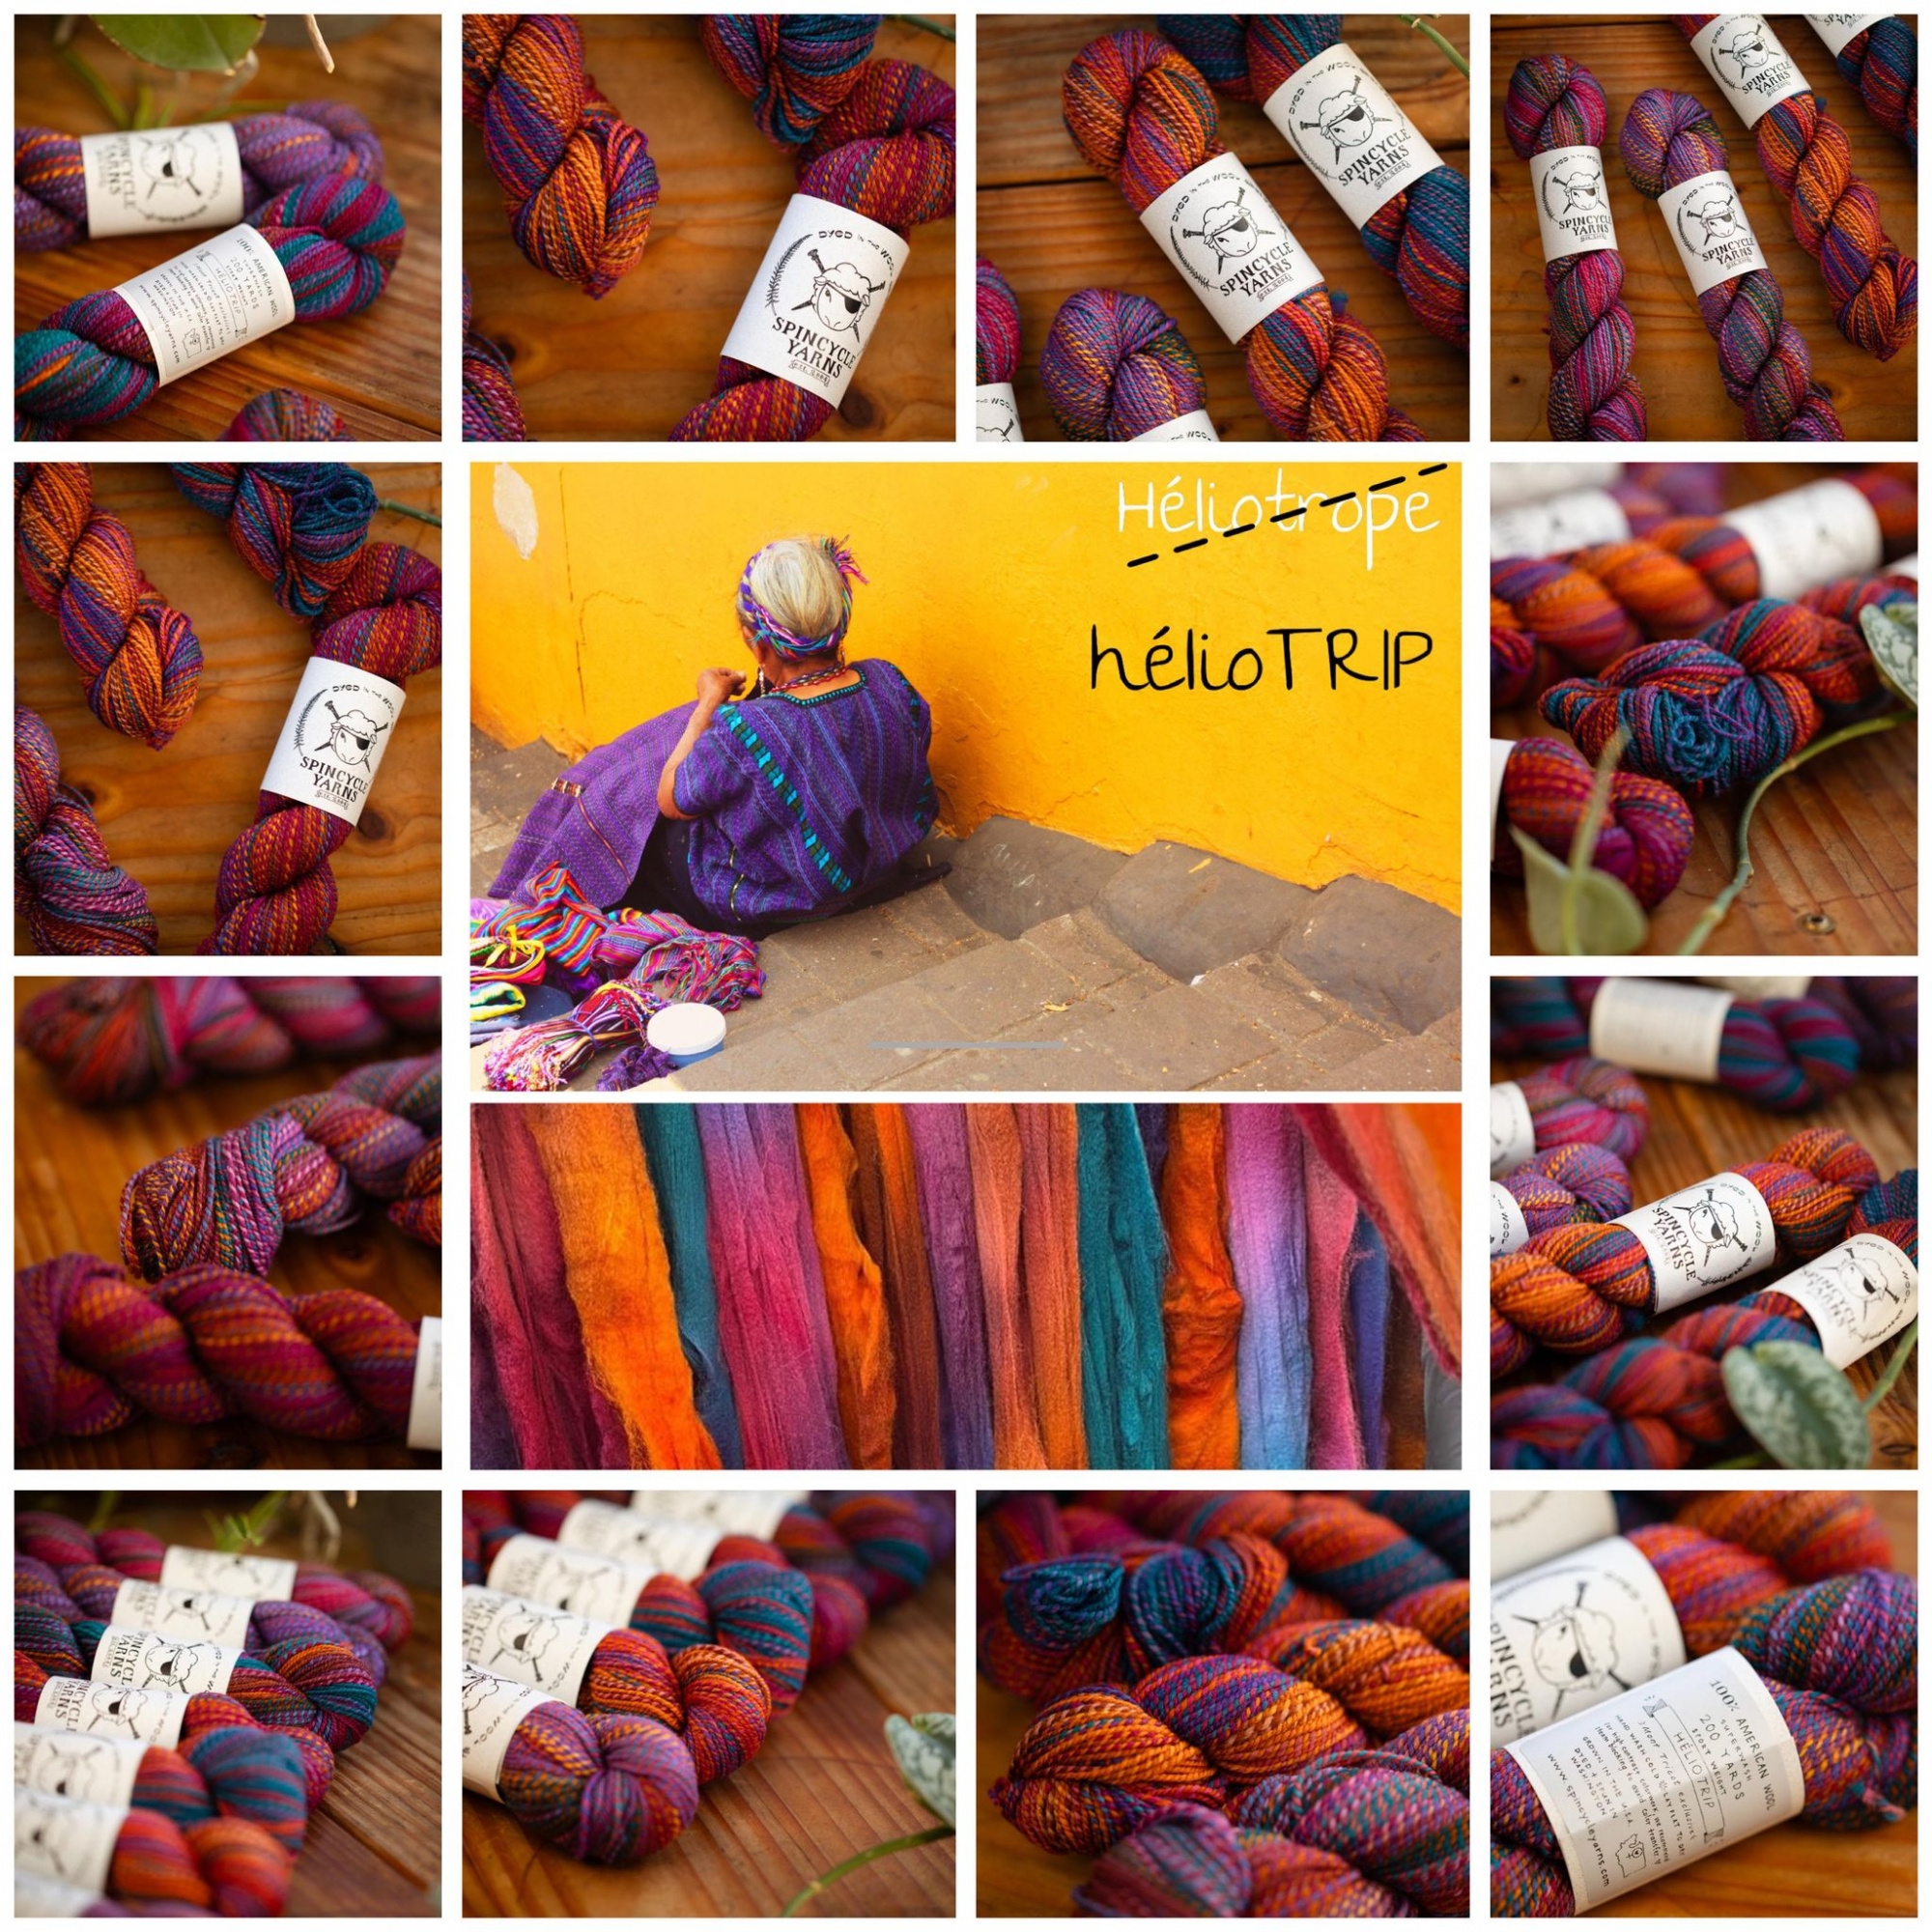 New! Sock Yarn from Dream in Color Yarn. - Creative Yarns